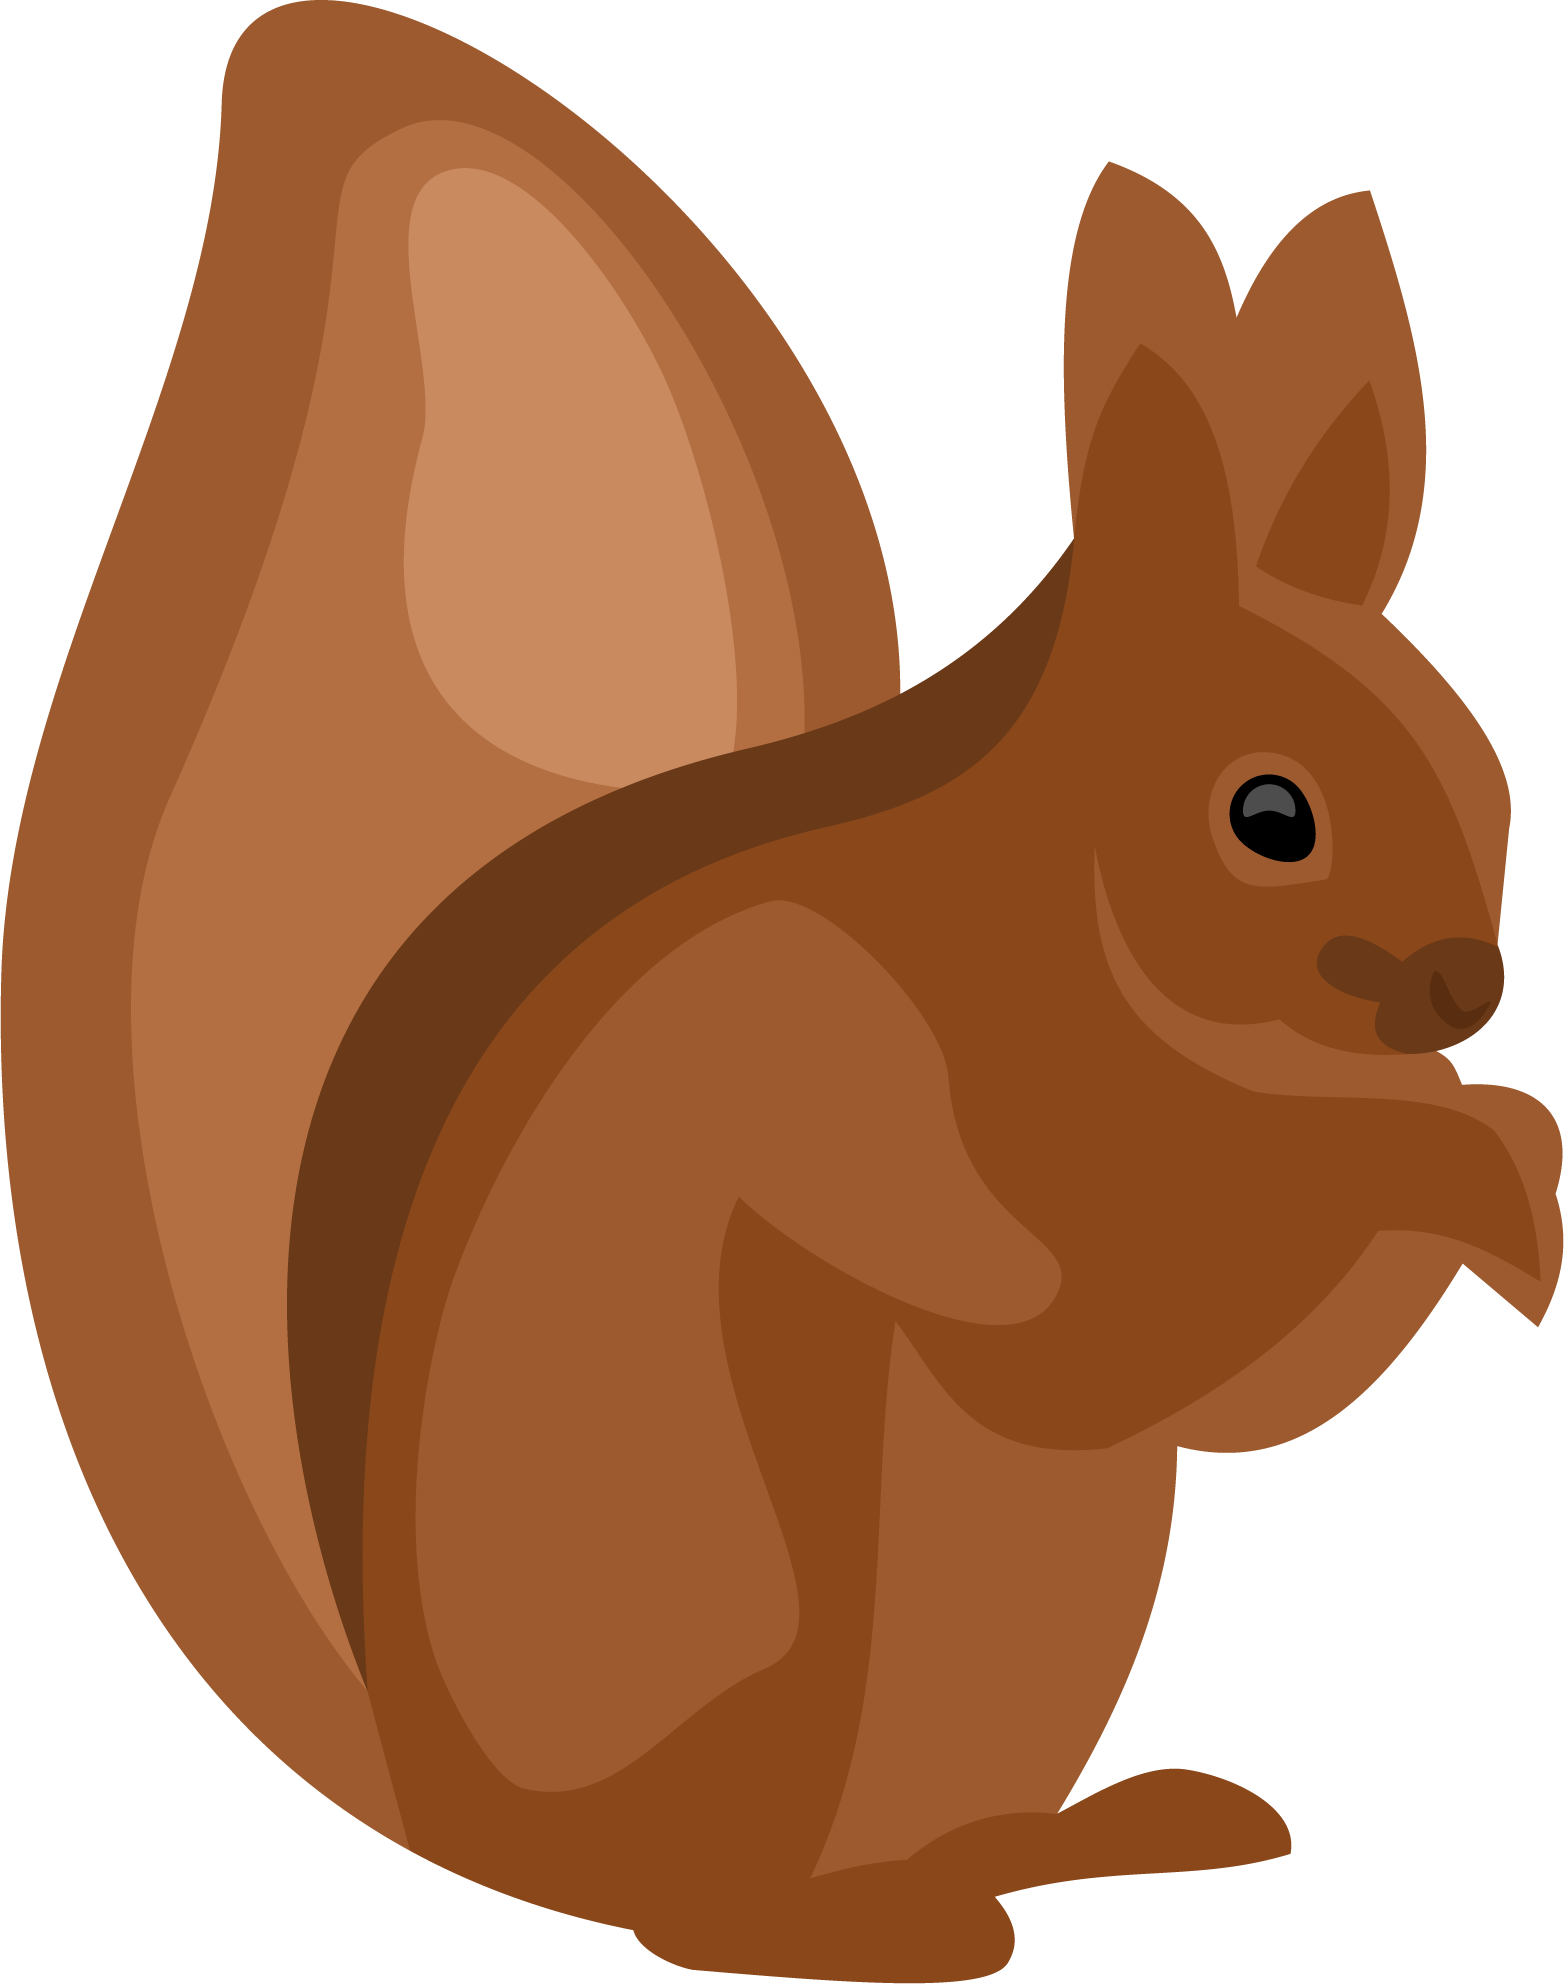 Squirrel Chipmunk Domestic Rabbit Cartoon - Squirrel Chipmunk Domestic Rabbit Cartoon (1564x1984)